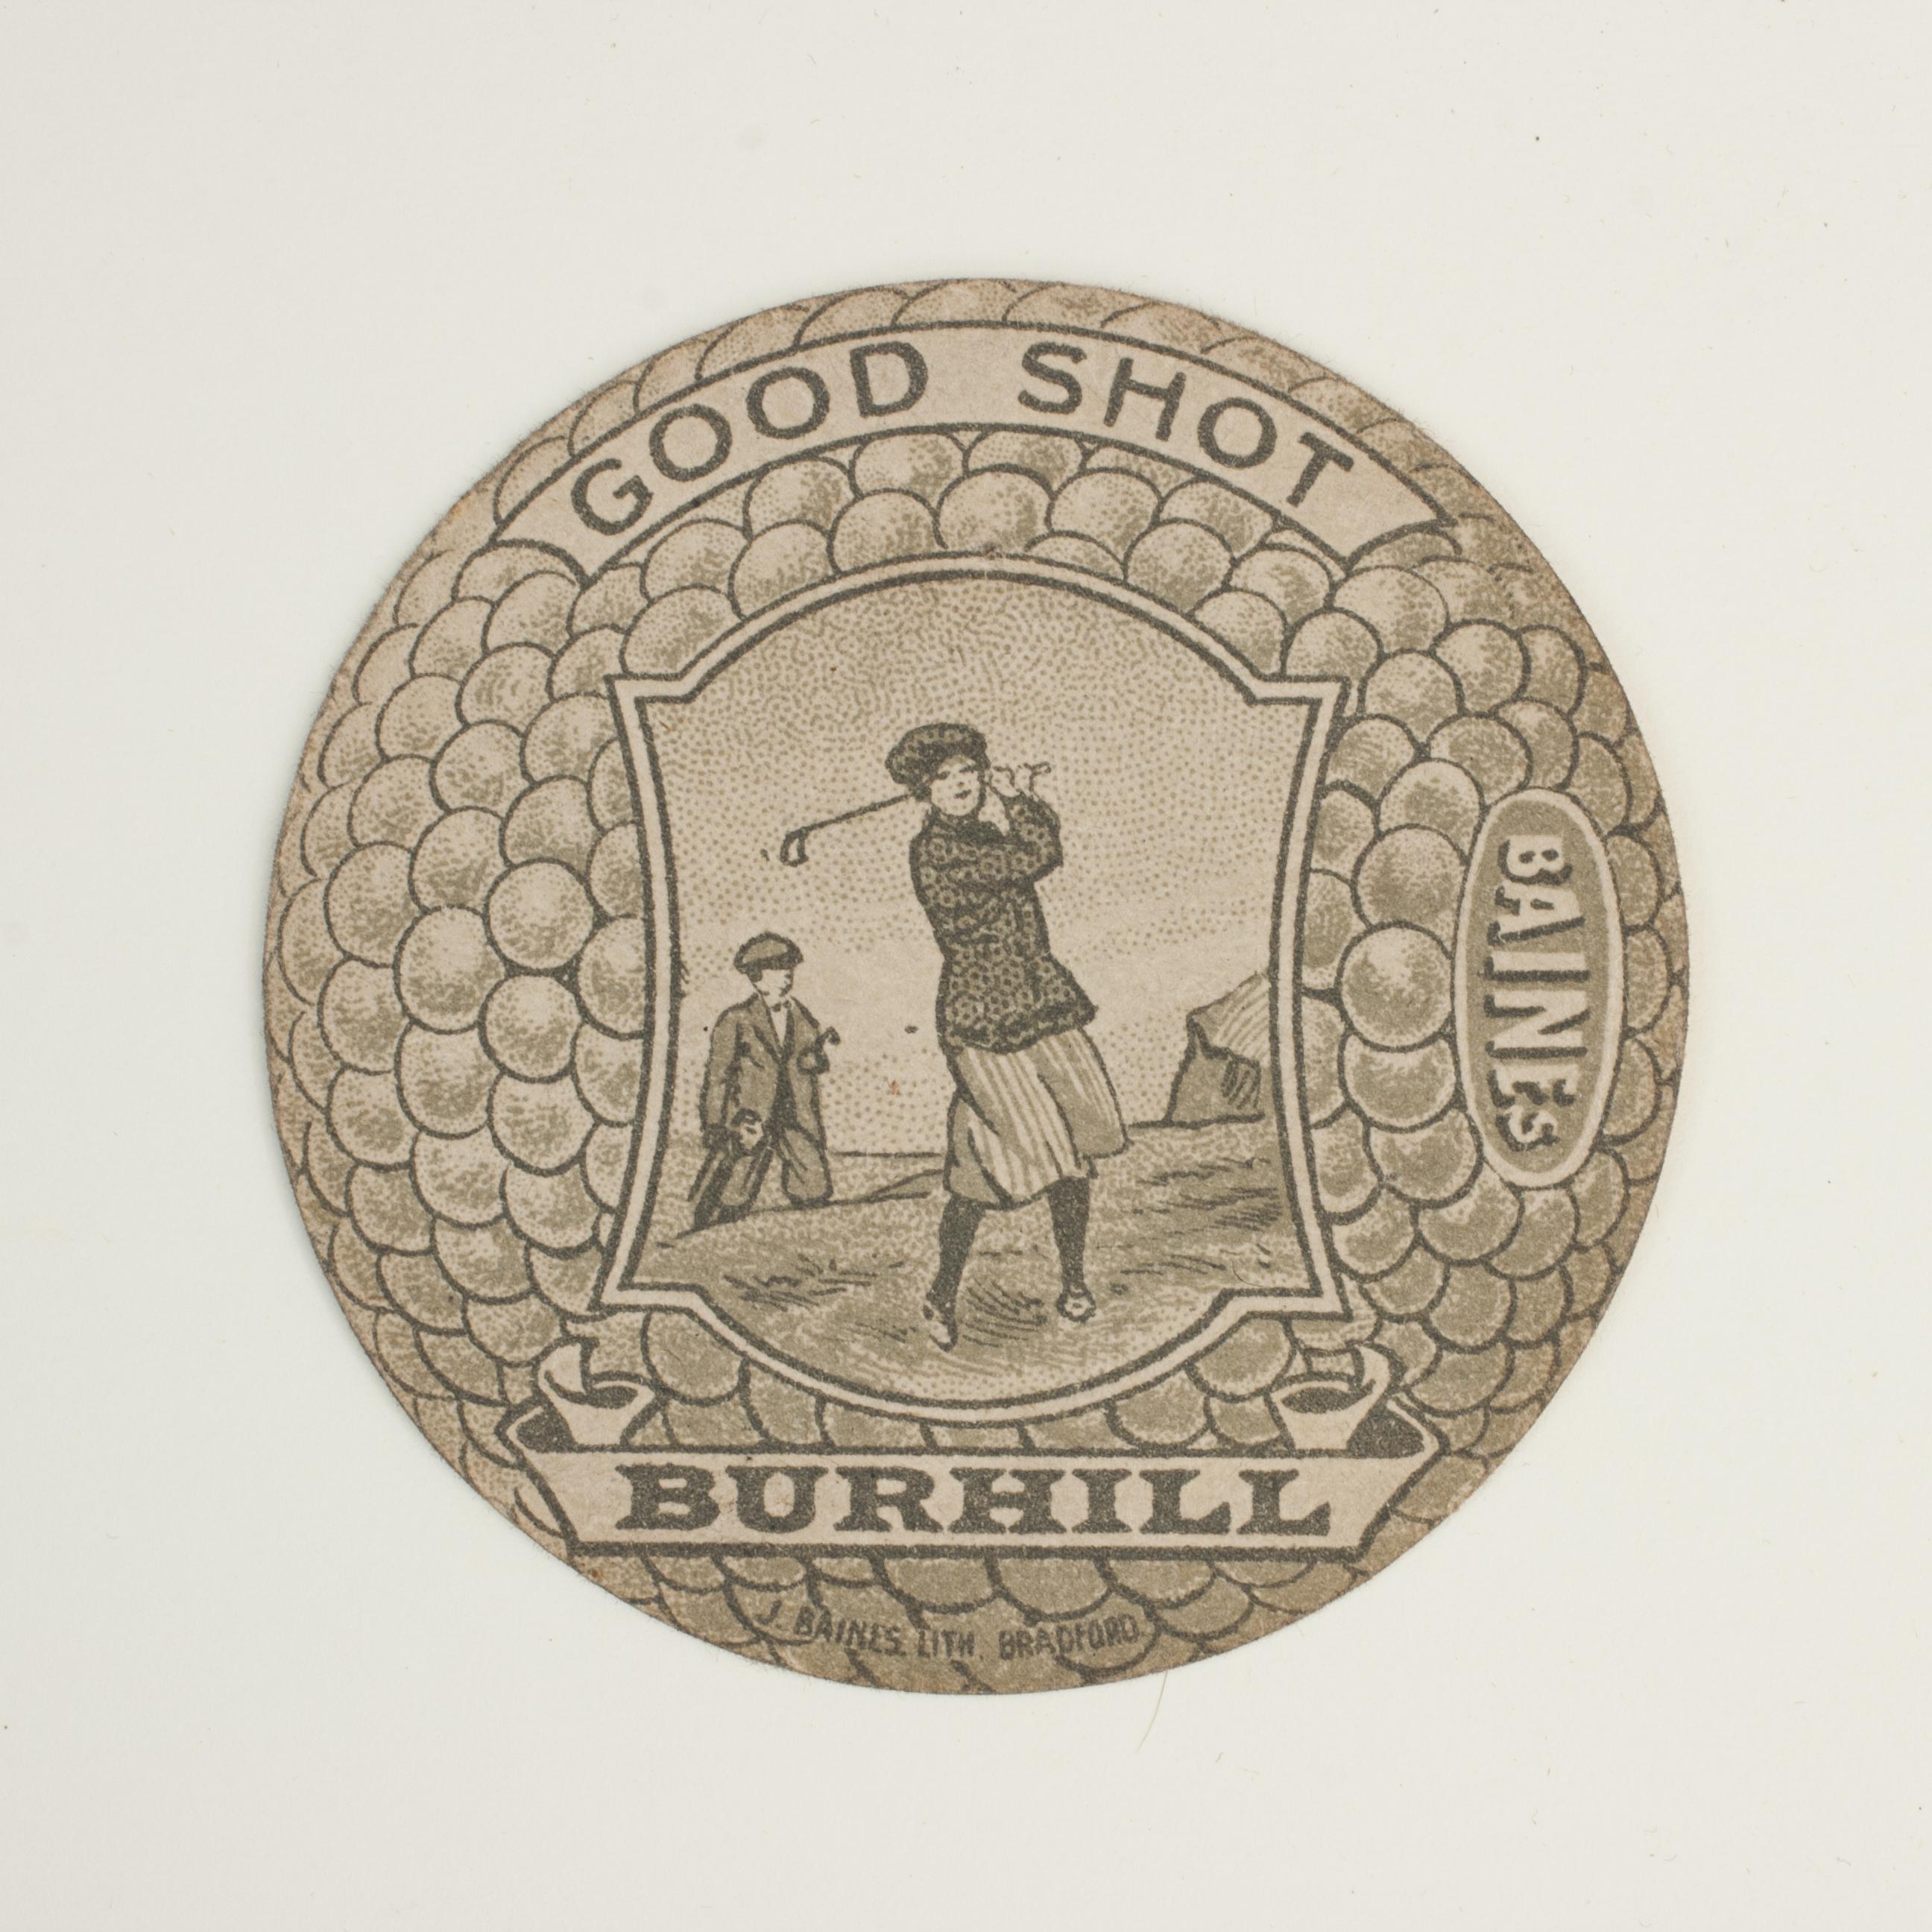 Sporting Art Vintage Baines Golf Trade Card, Burhill Golf Club. For Sale